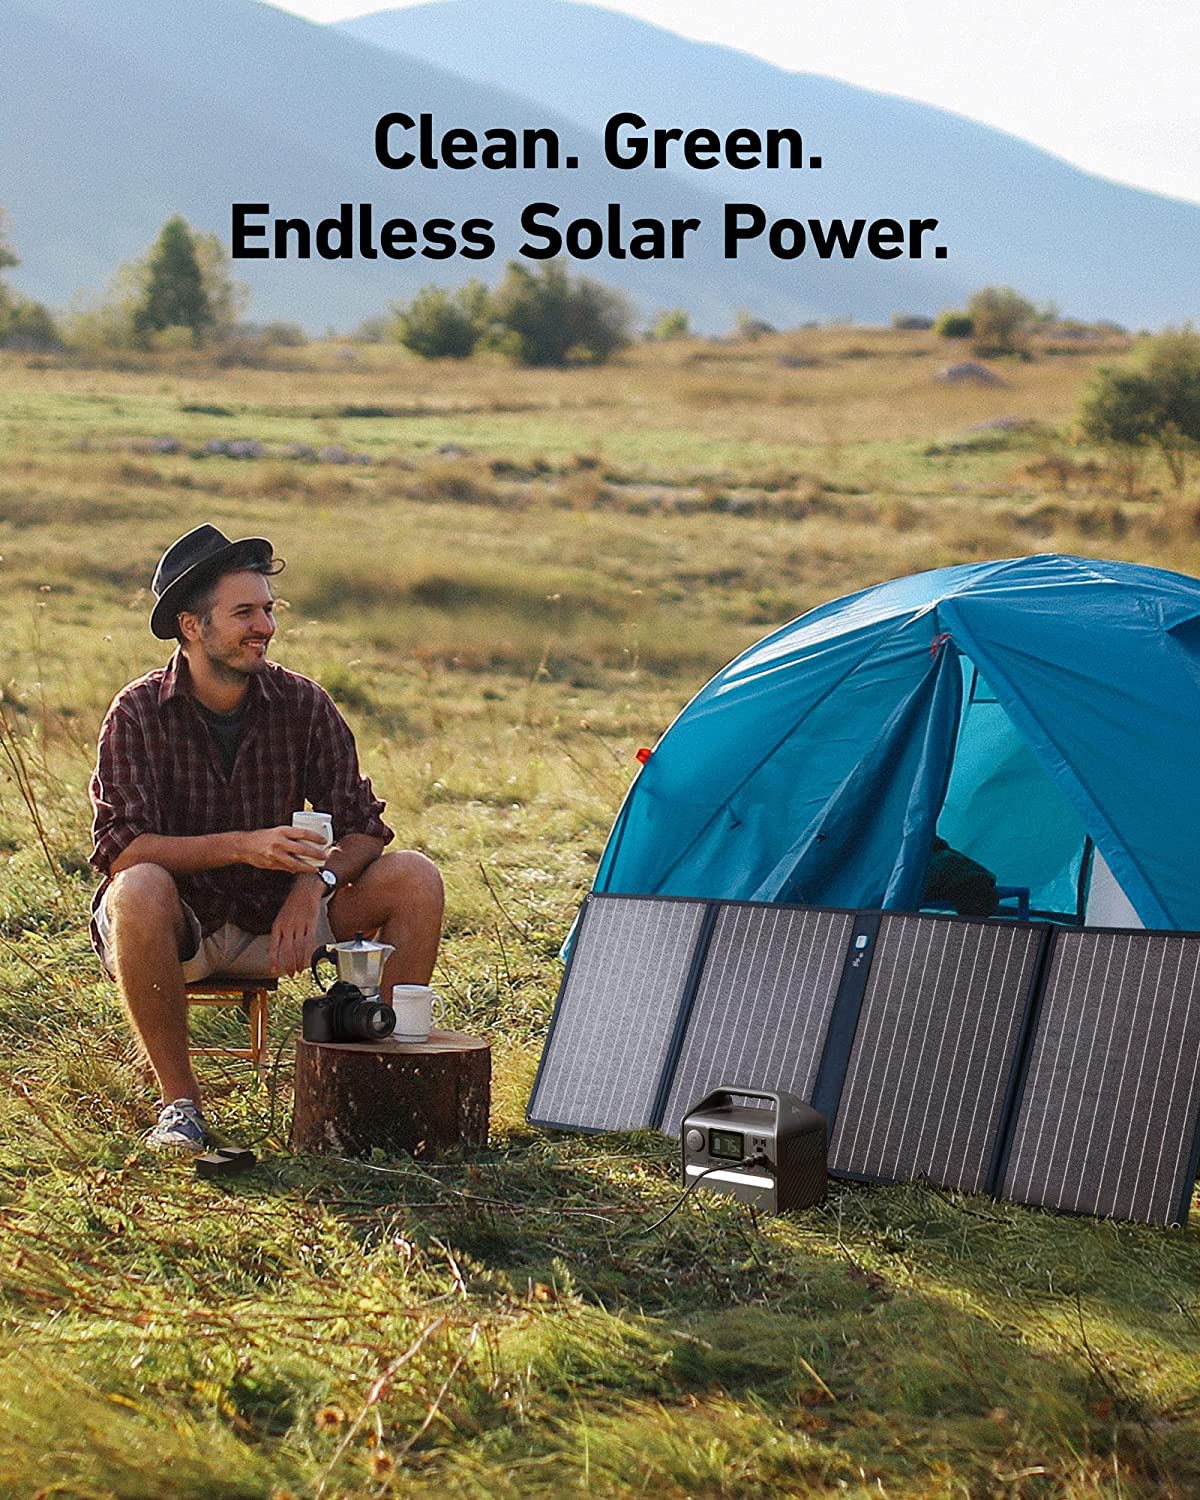 The Anker Solar Generator 521 Has Clean, Green, & Endless Solar Power